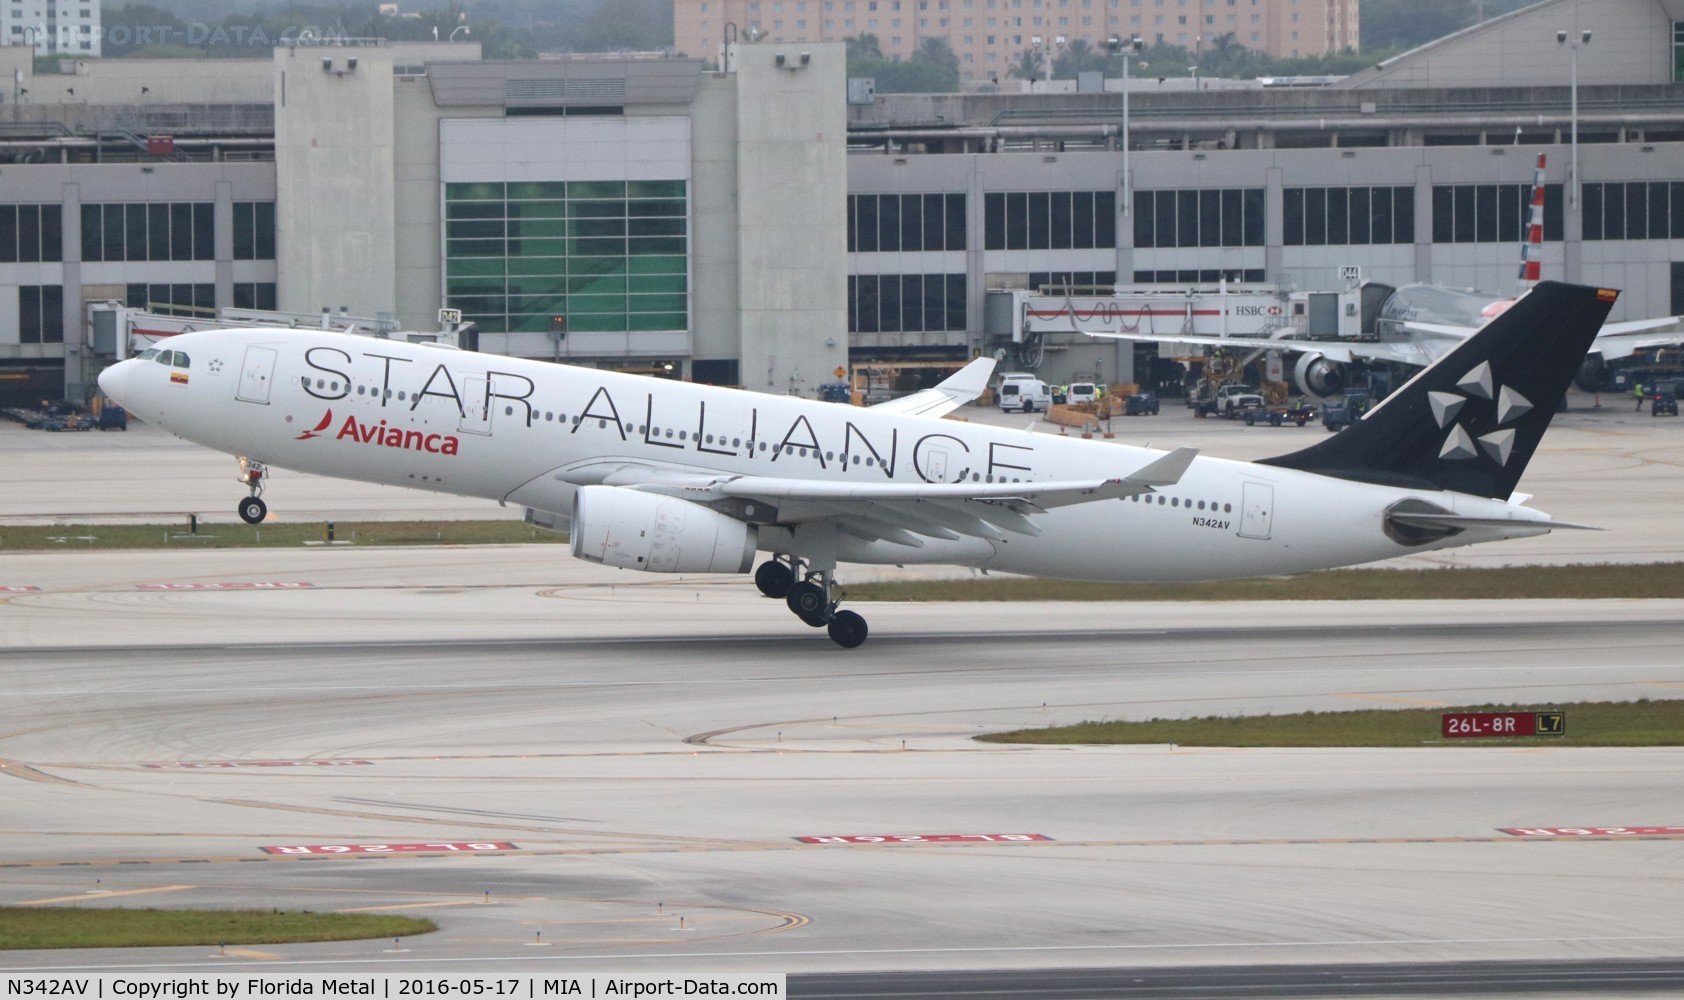 N342AV, 2012 Airbus A330-243 C/N 1342, Avianca Star Alliance